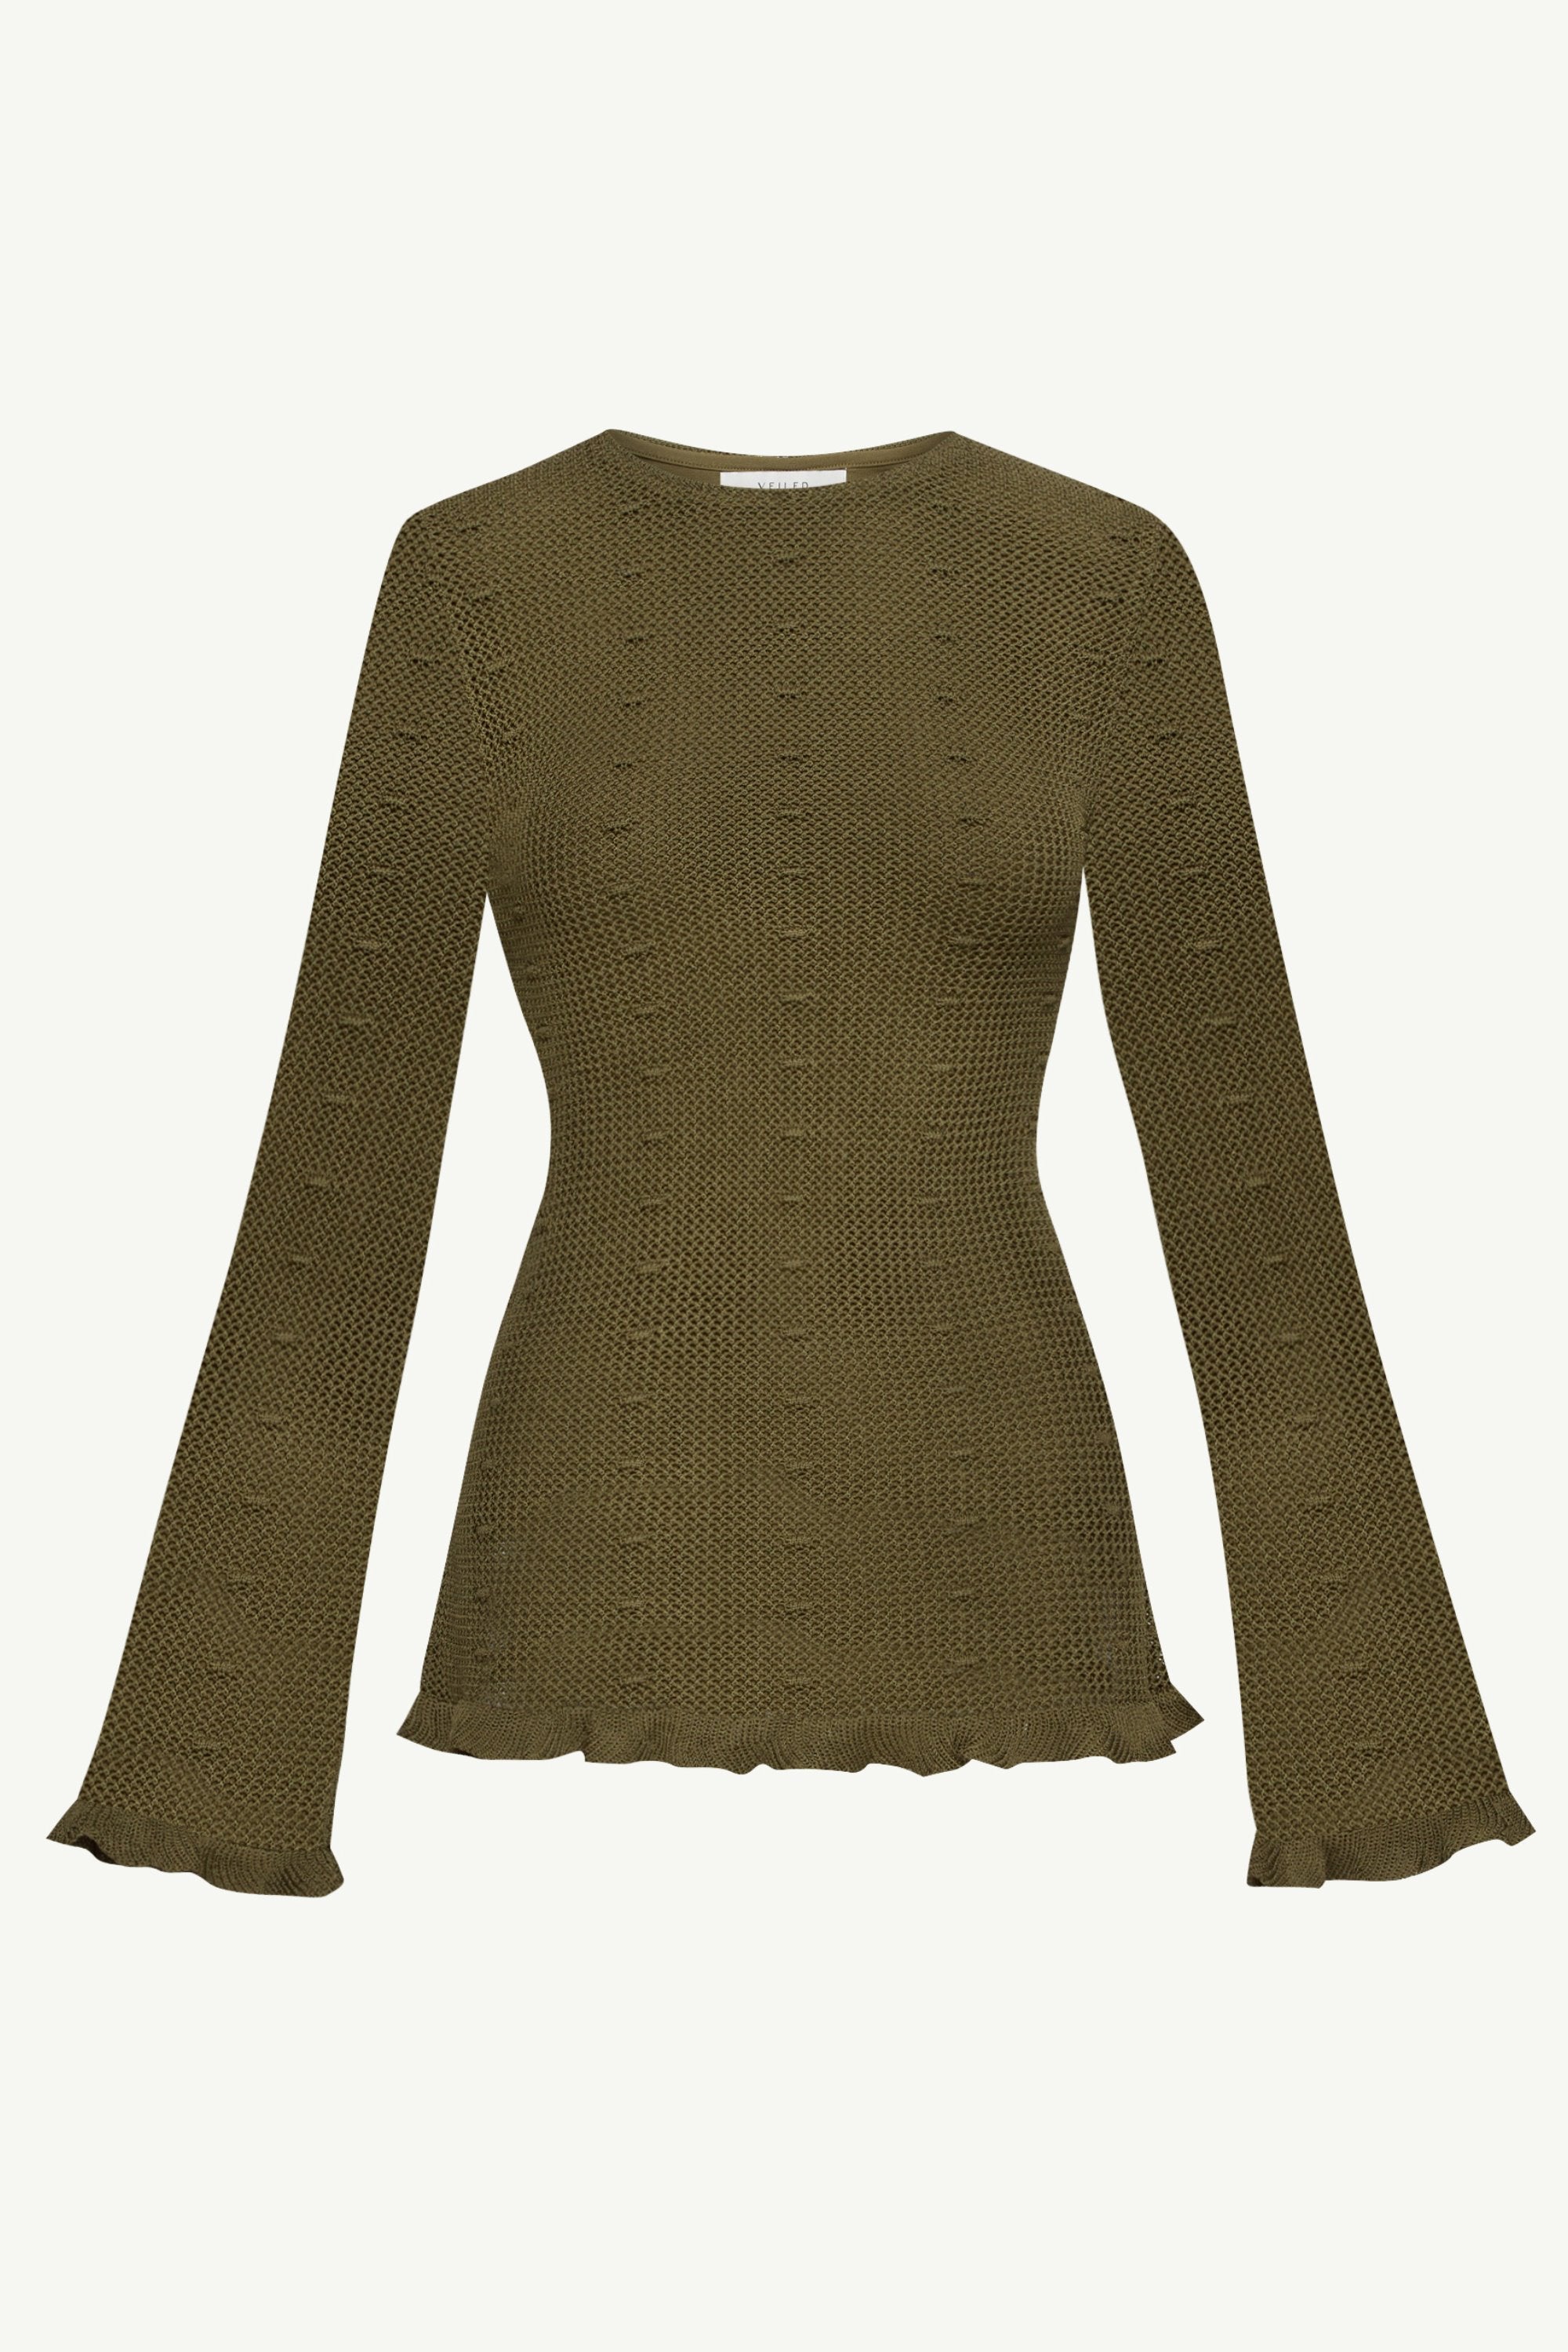 Yara Crochet Top - Dark Olive Clothing epschoolboard 